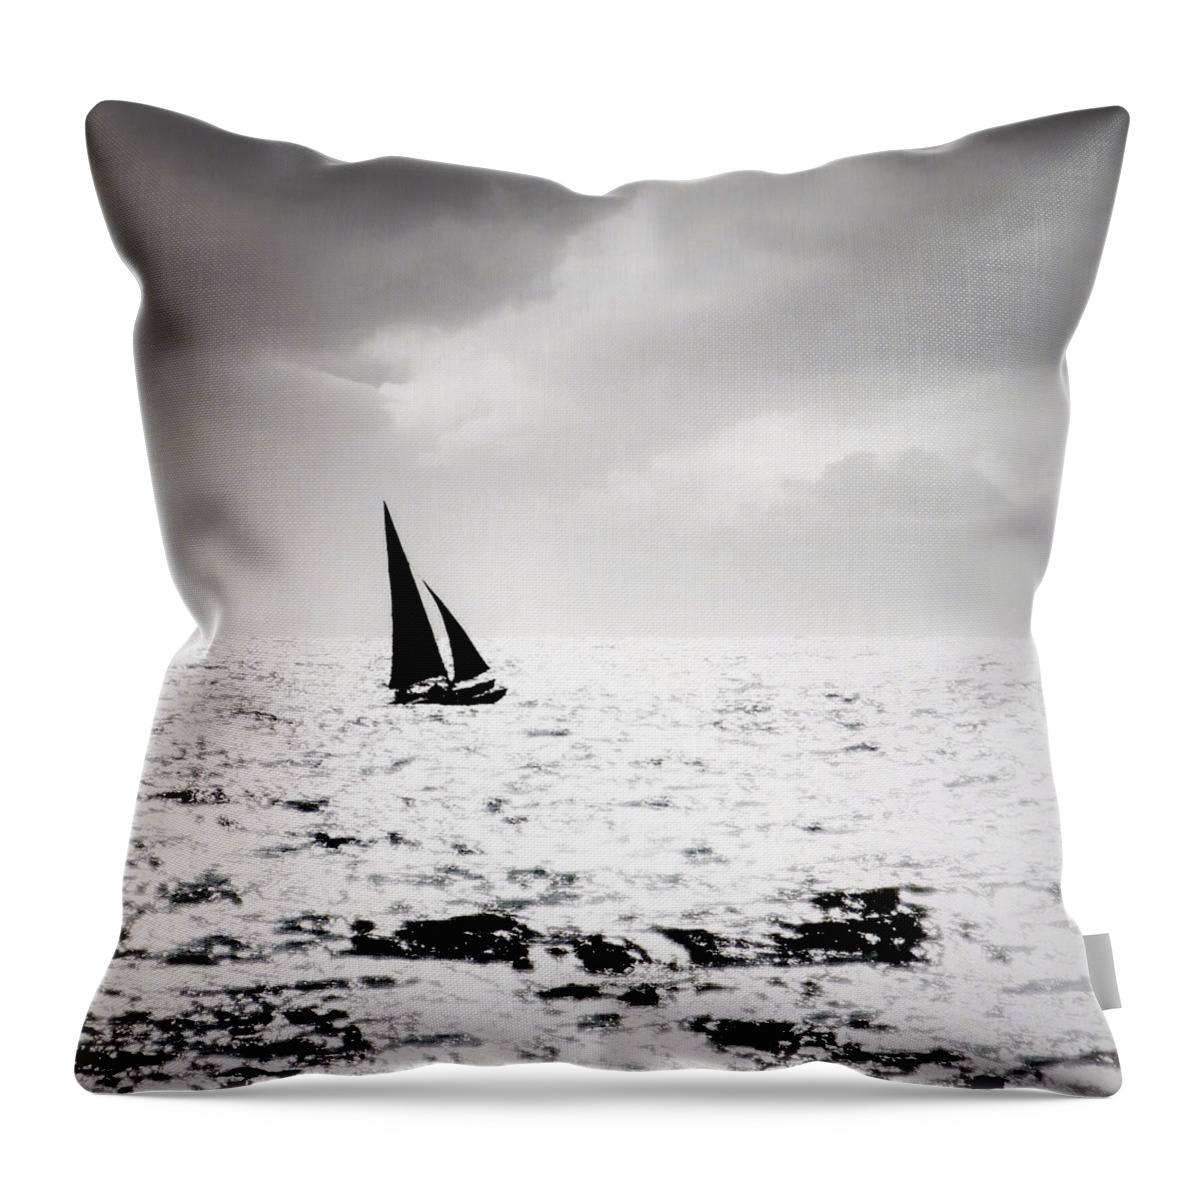 Ocean Throw Pillow featuring the photograph Vela #2 by Natasha Marco